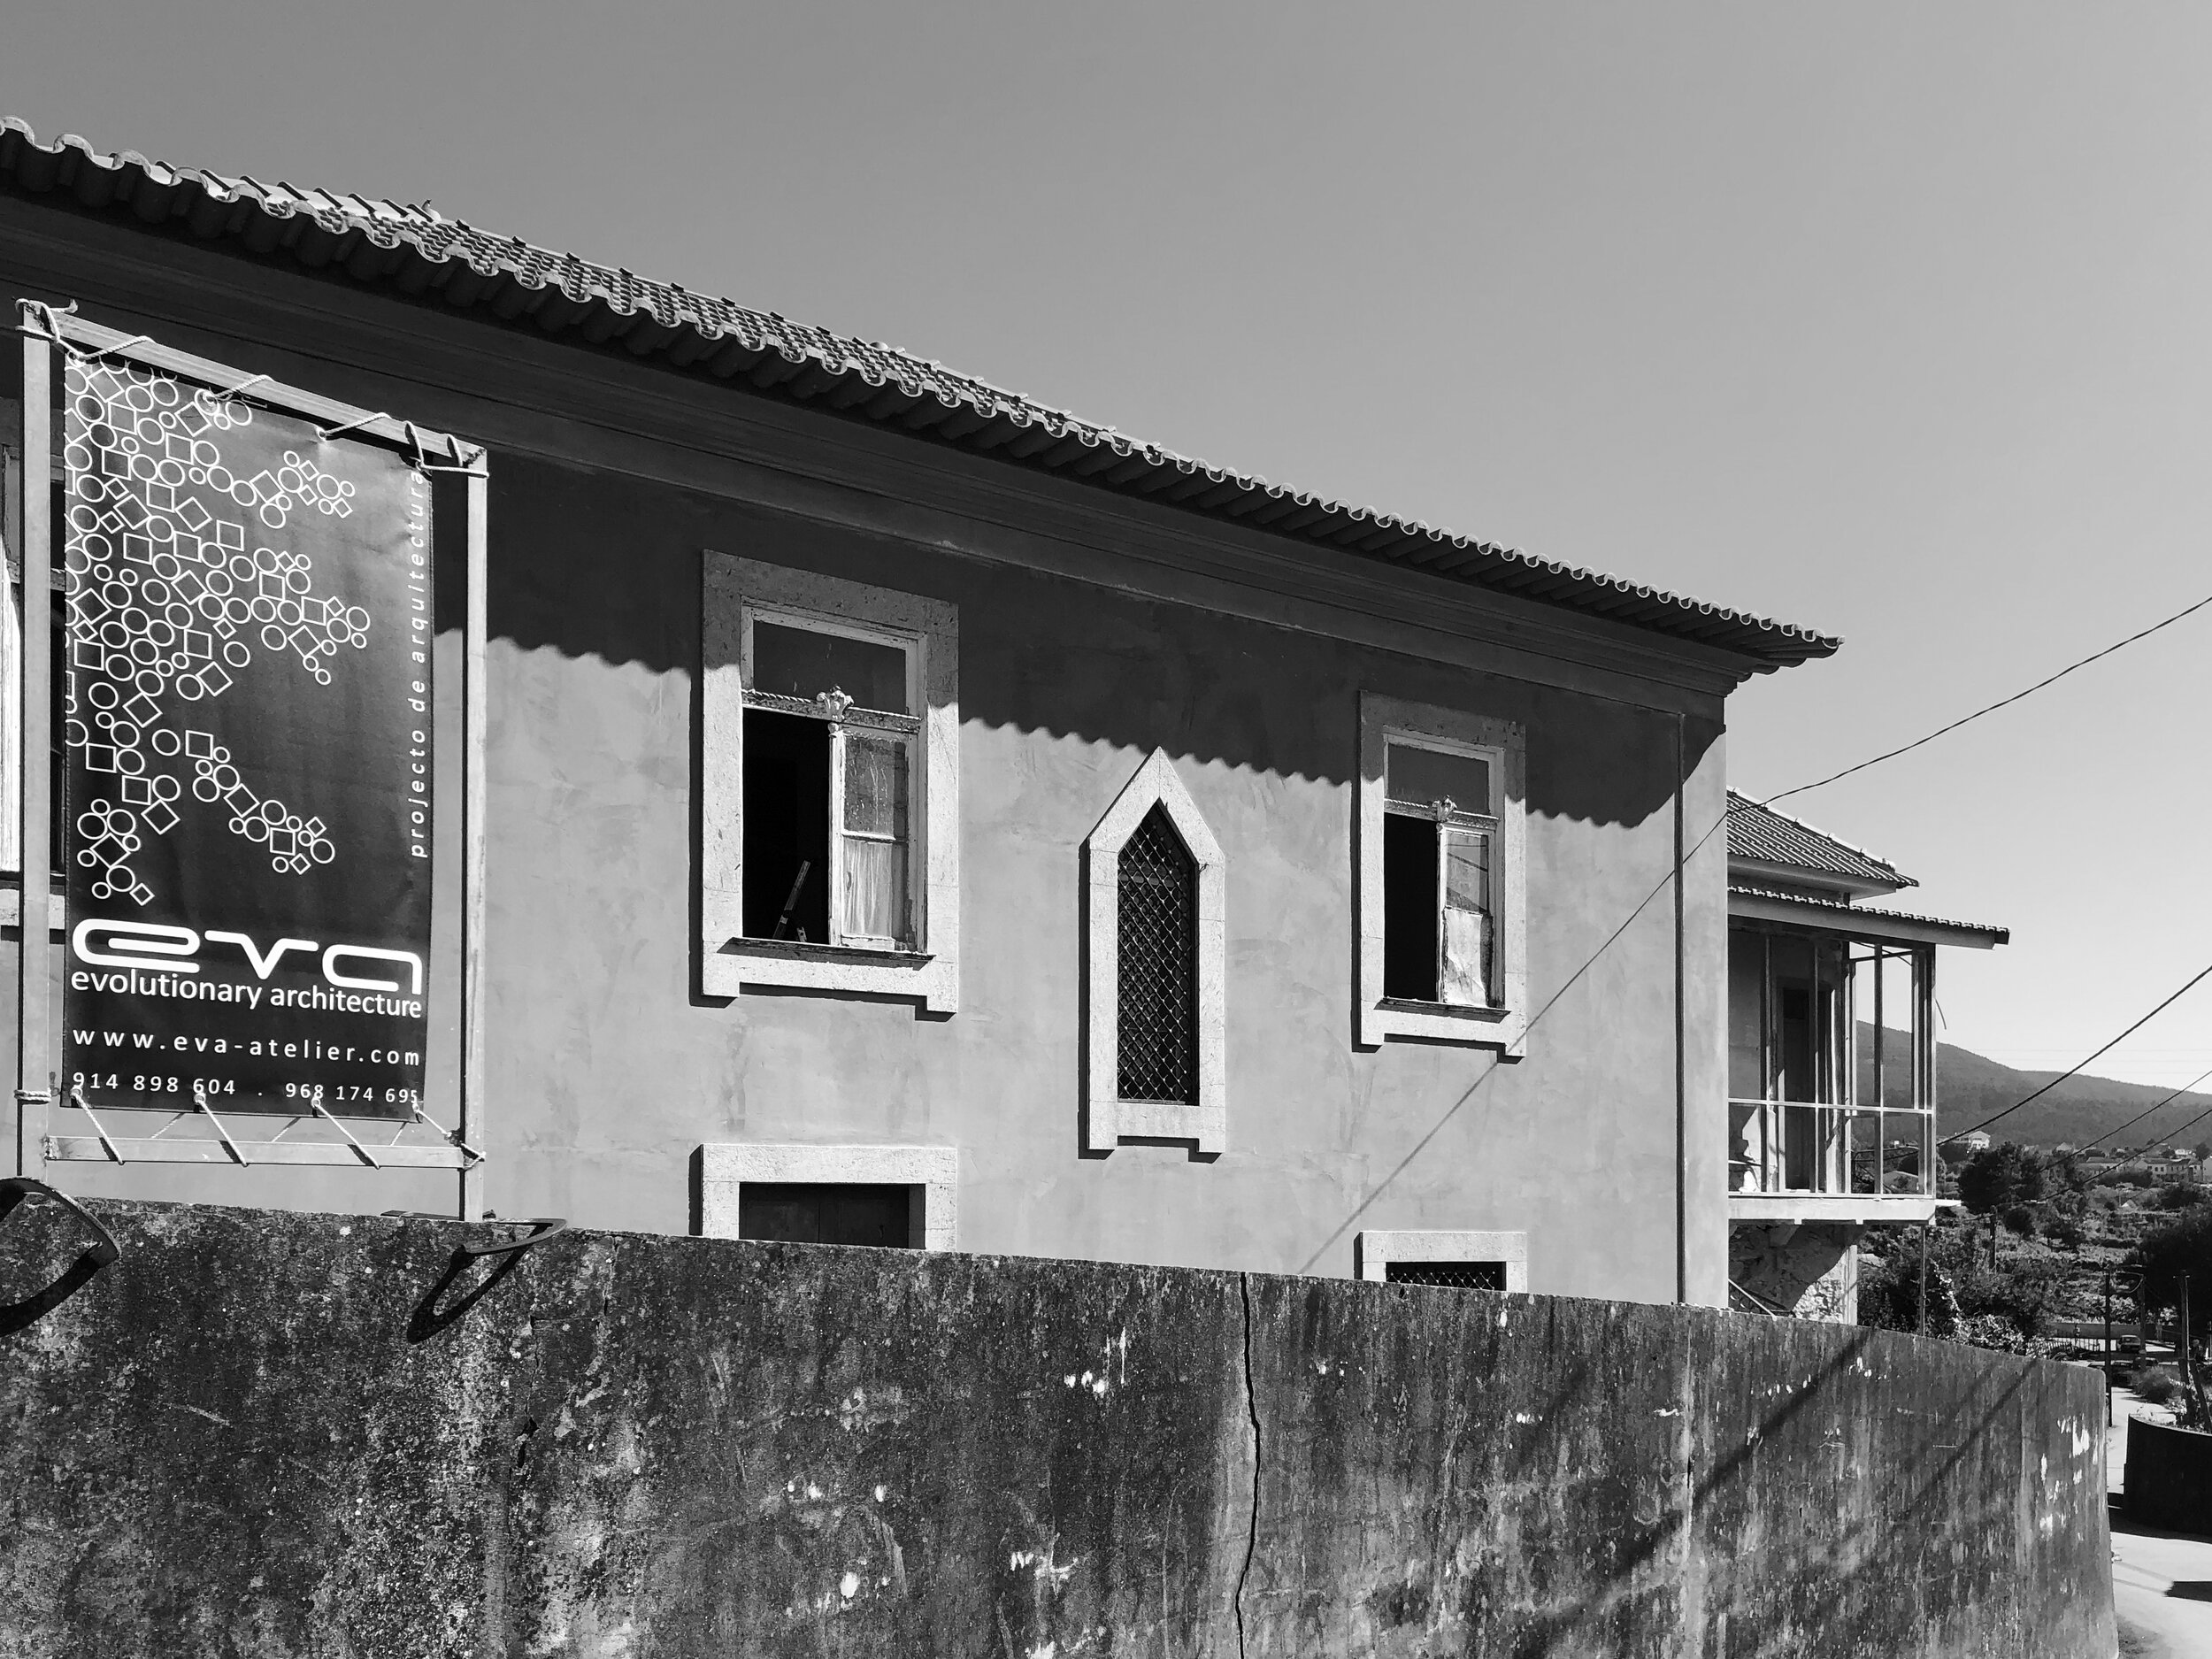 Casa de Burgães - EVA atelier - Vale de Cambra - restauro - património - projecto - arquitectura (4).jpg